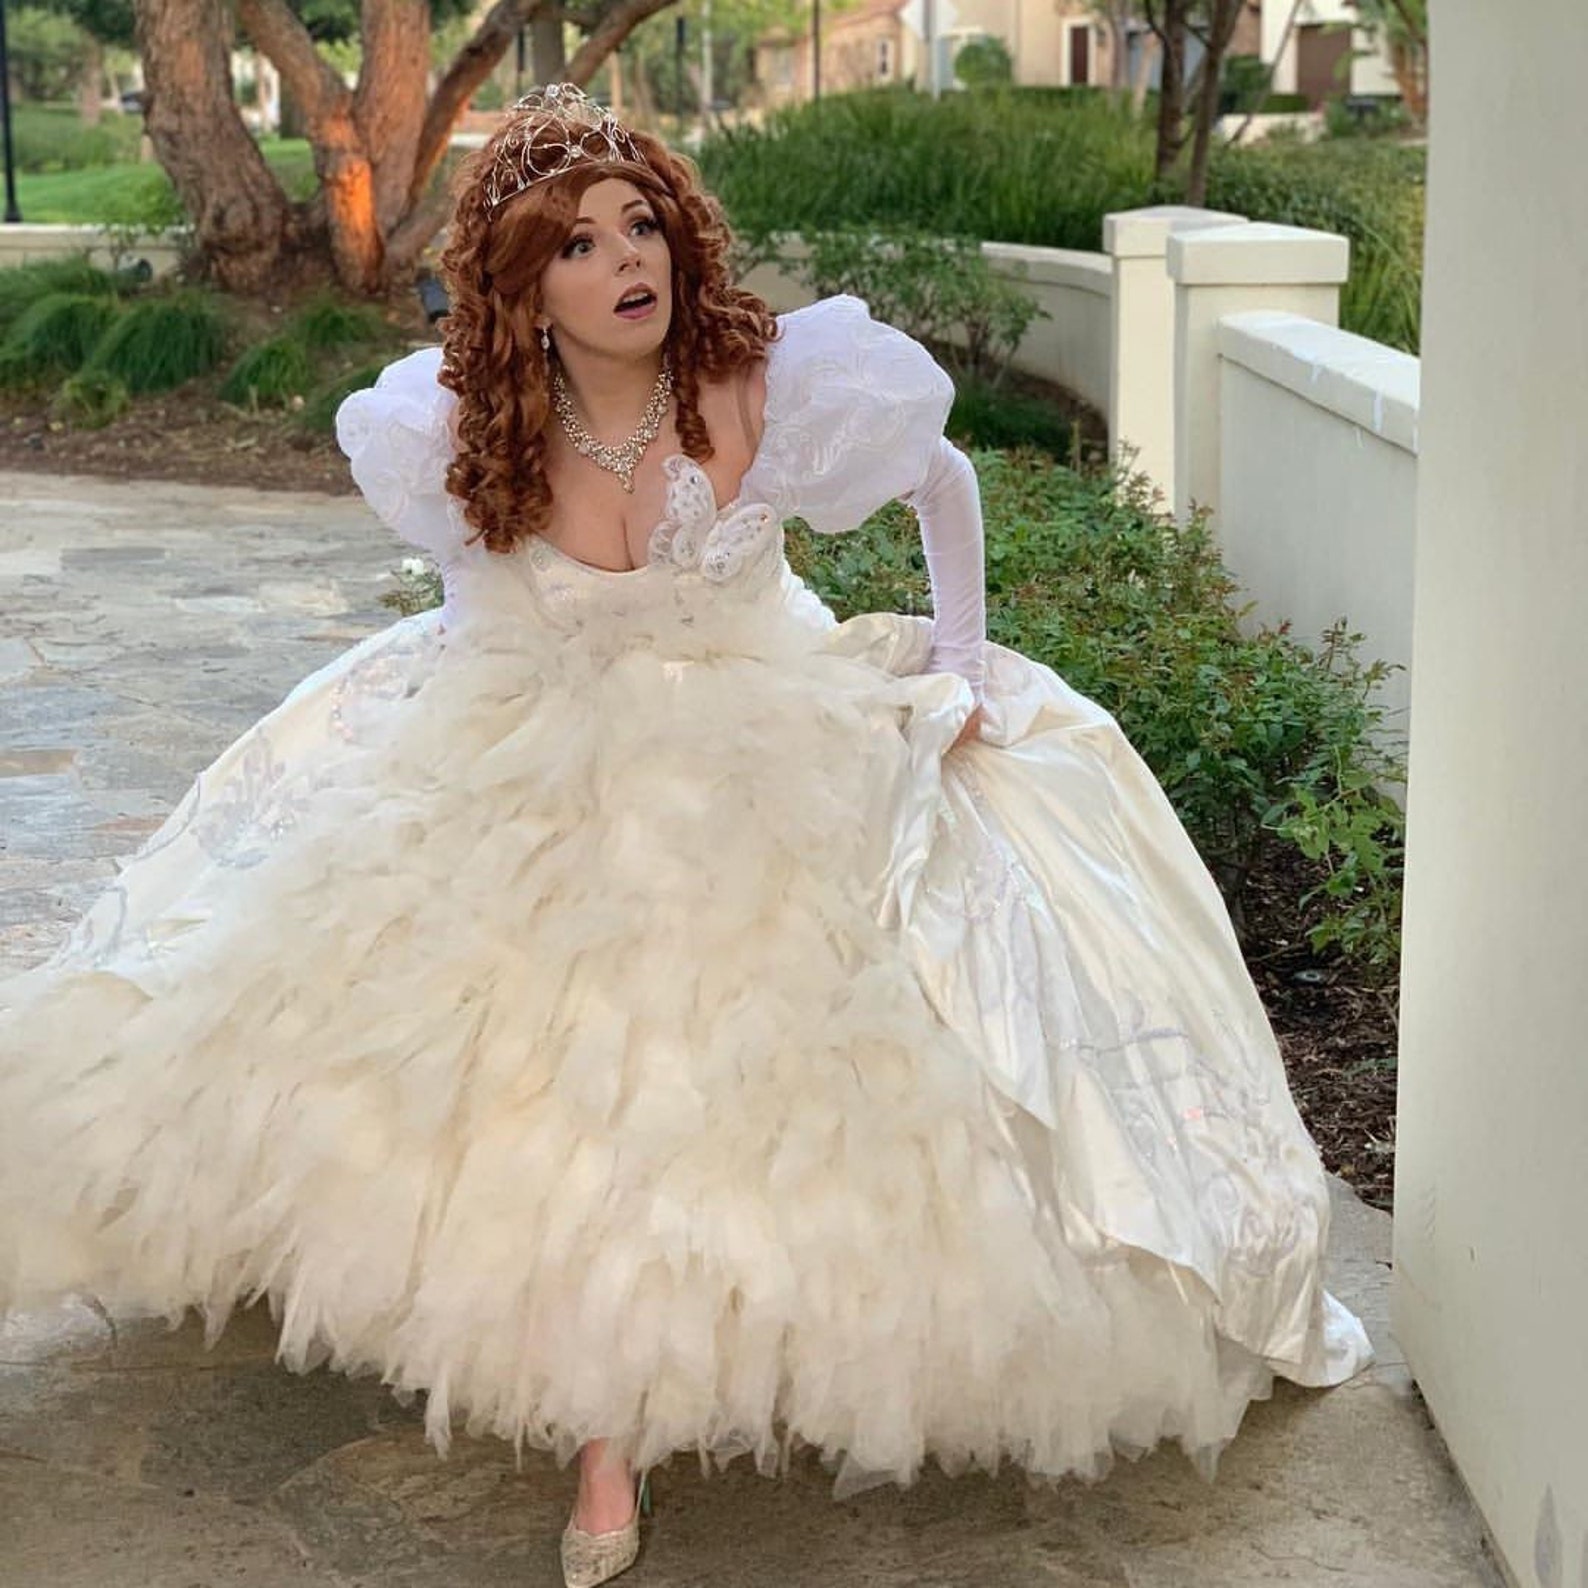 Giselle Wedding Dress Enchanted film Disney character | Etsy